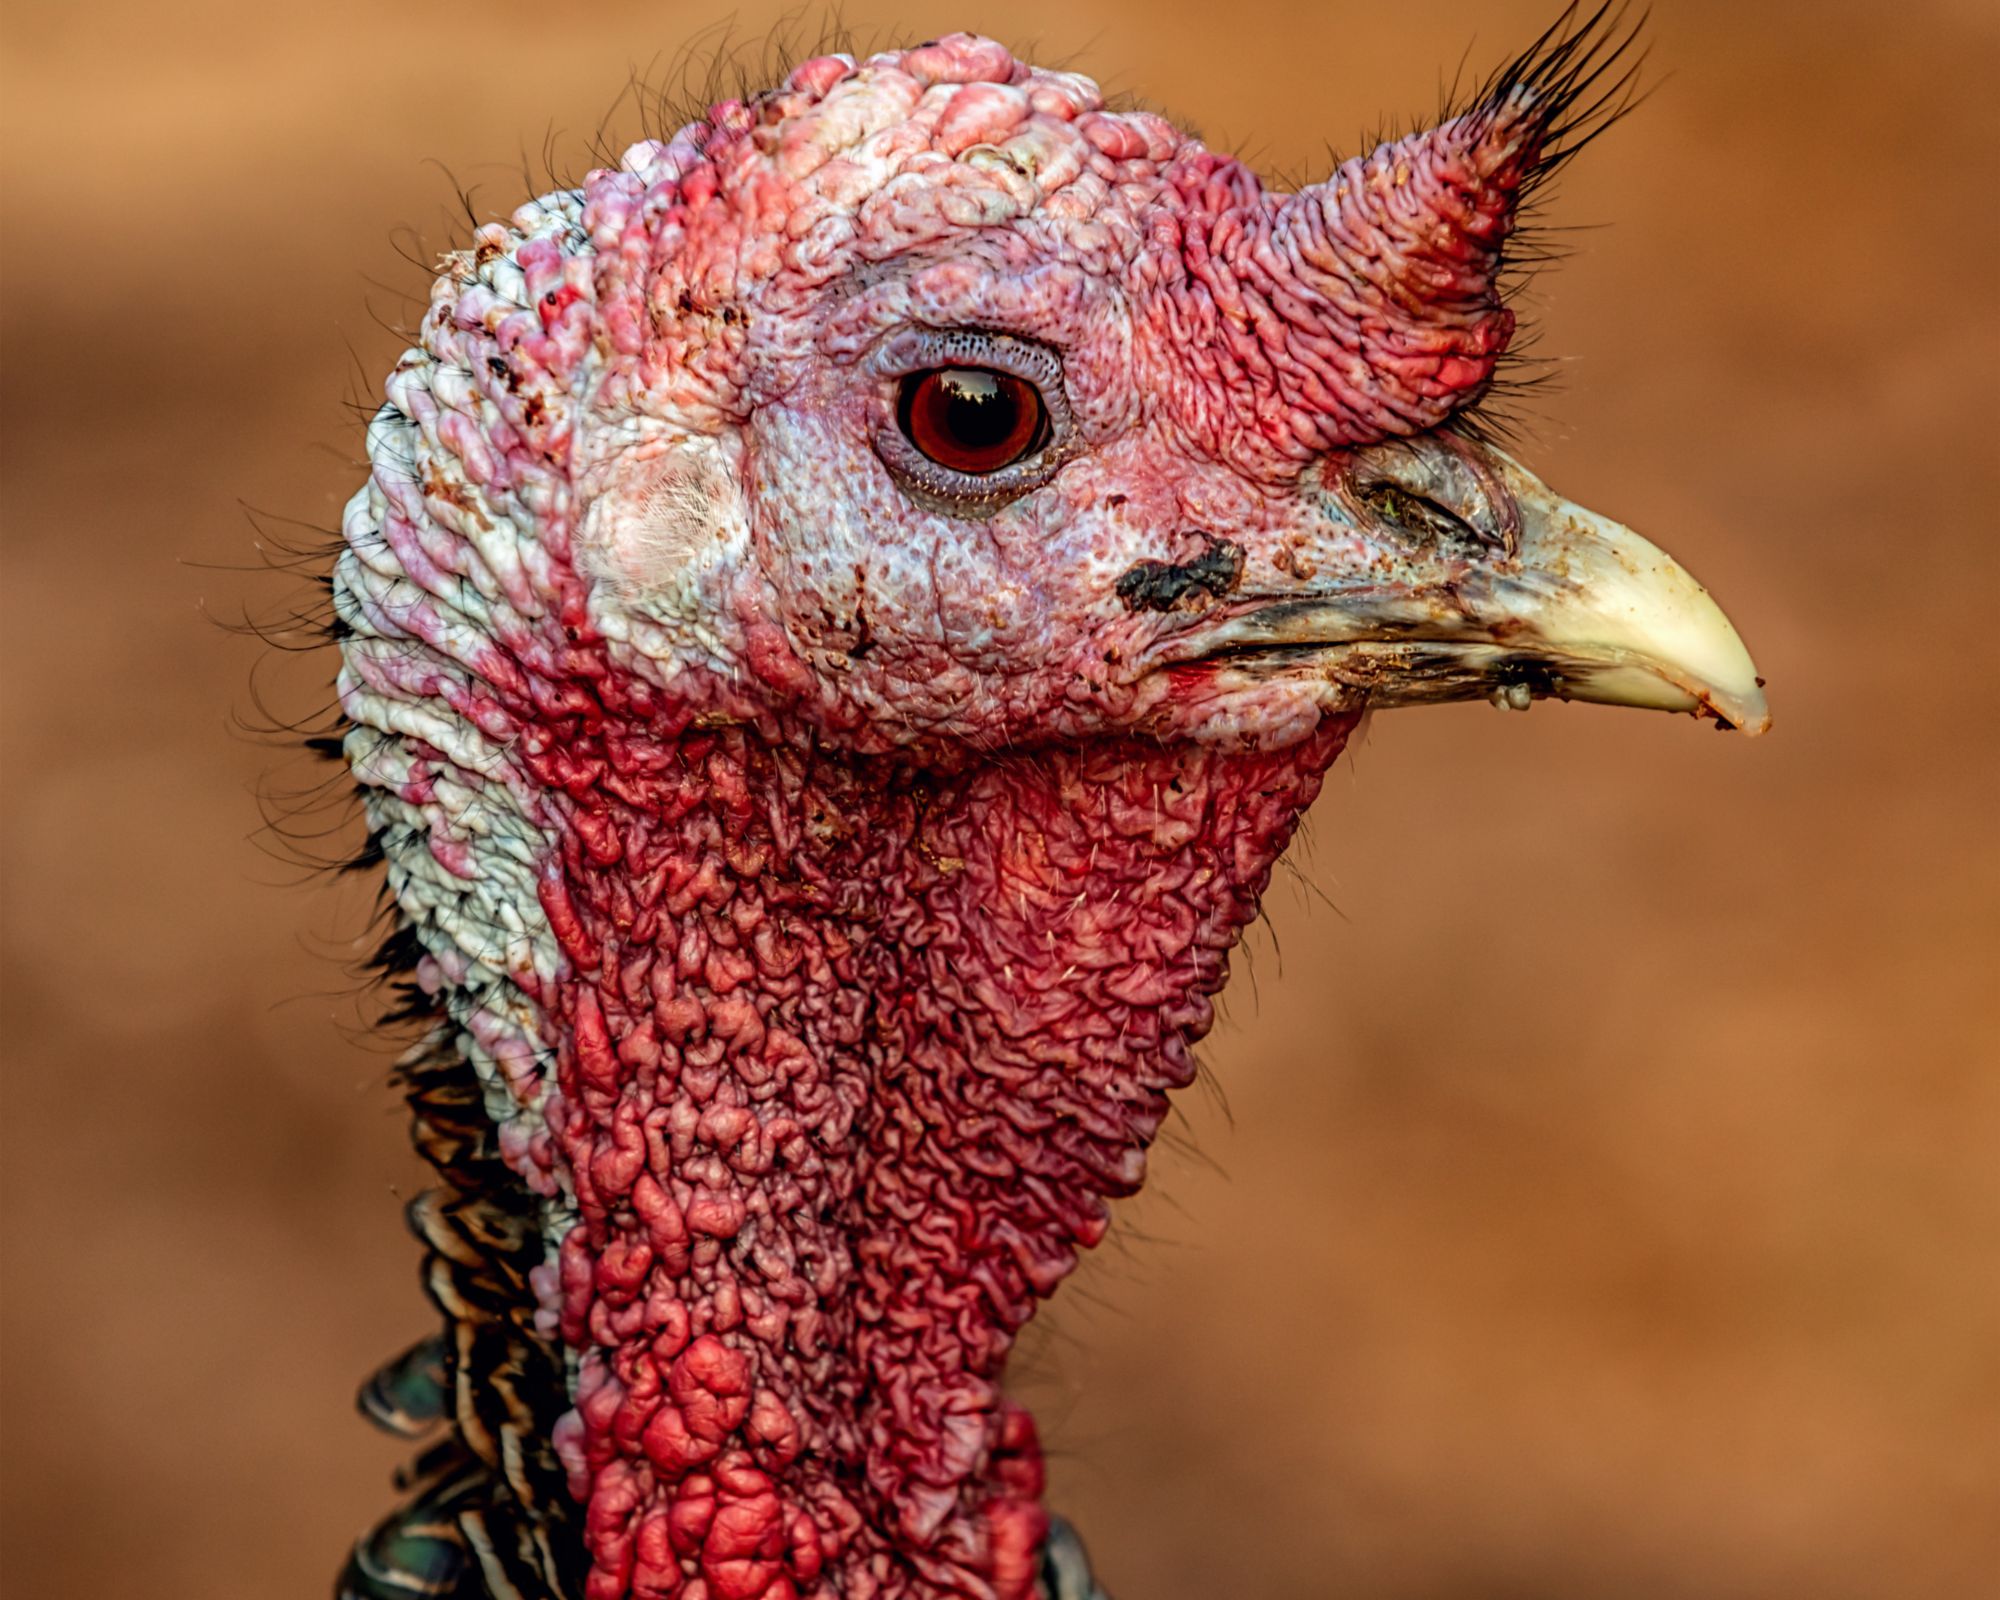 Free-range turkey supplies are affected by Bird flu